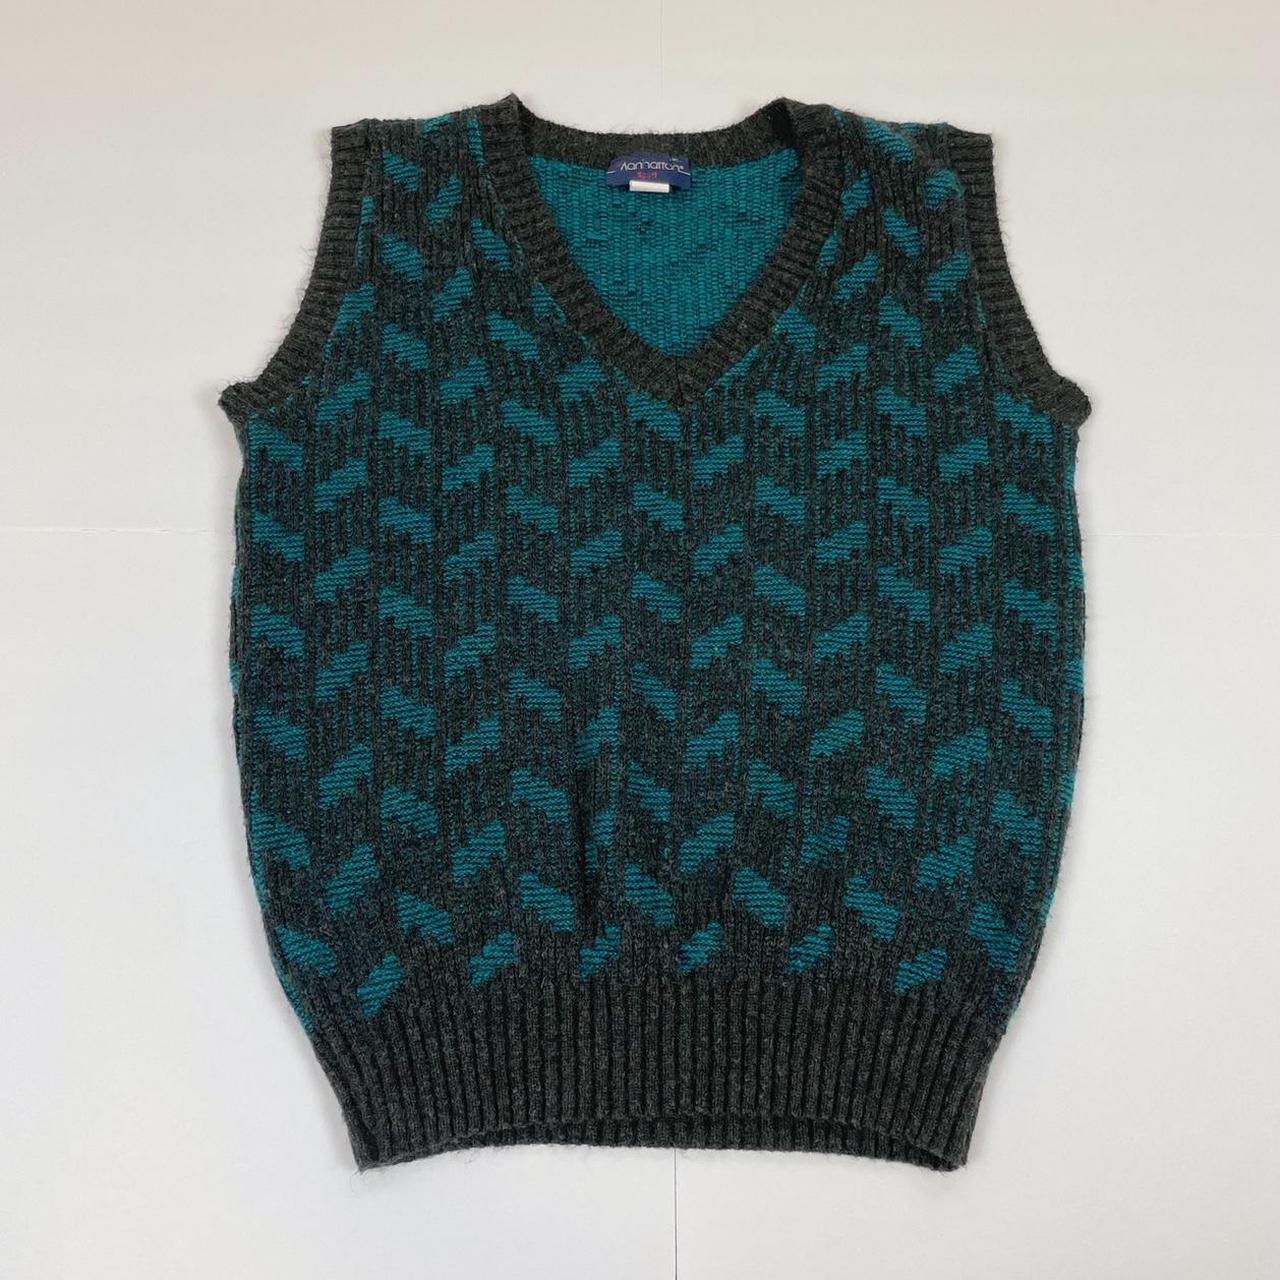 Product Image 2 - Manhattan Grey/Teal Sweater Vest
Sleeveless sweater